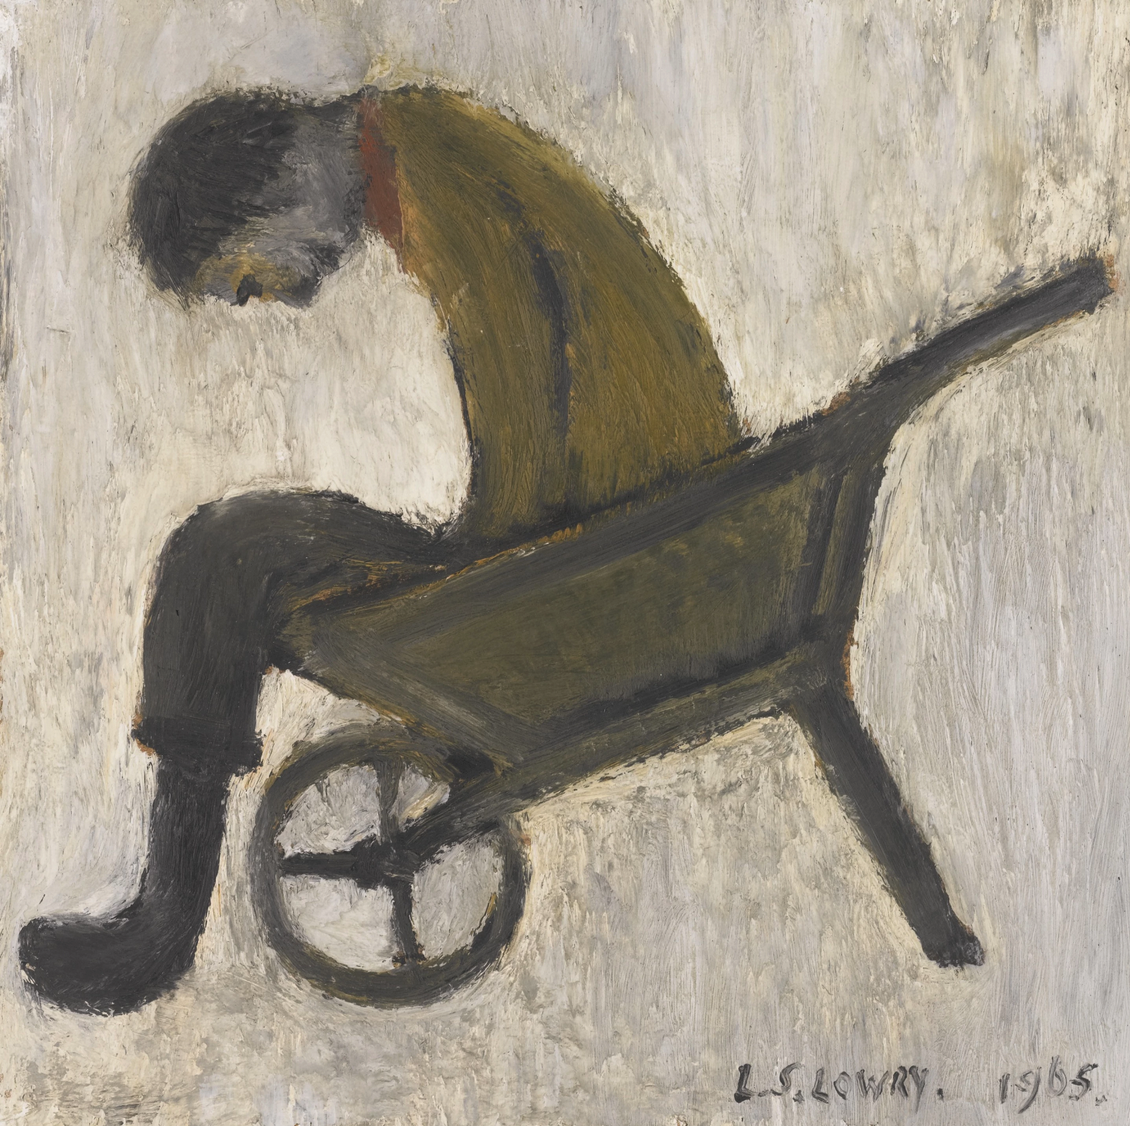 Man Sitting in a Wheelbarrow (1965) by Laurence Stephen Lowry (1887 - 1976), English artist.